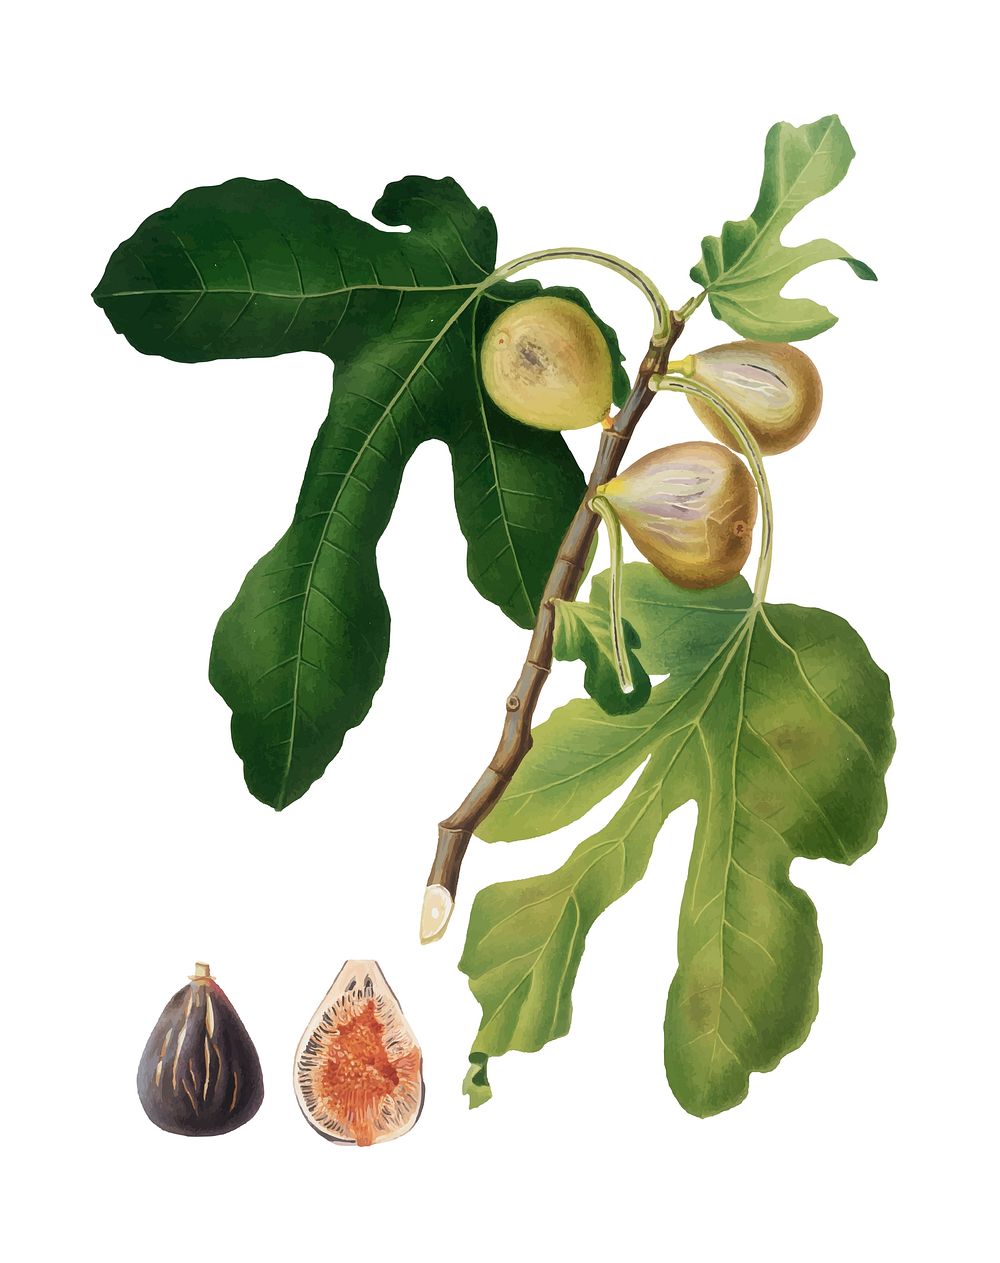 Figs from Pomona Italiana (1817-1839) by Giorgio Gallesio (1772-1839). Original from New York public library. Digitally…